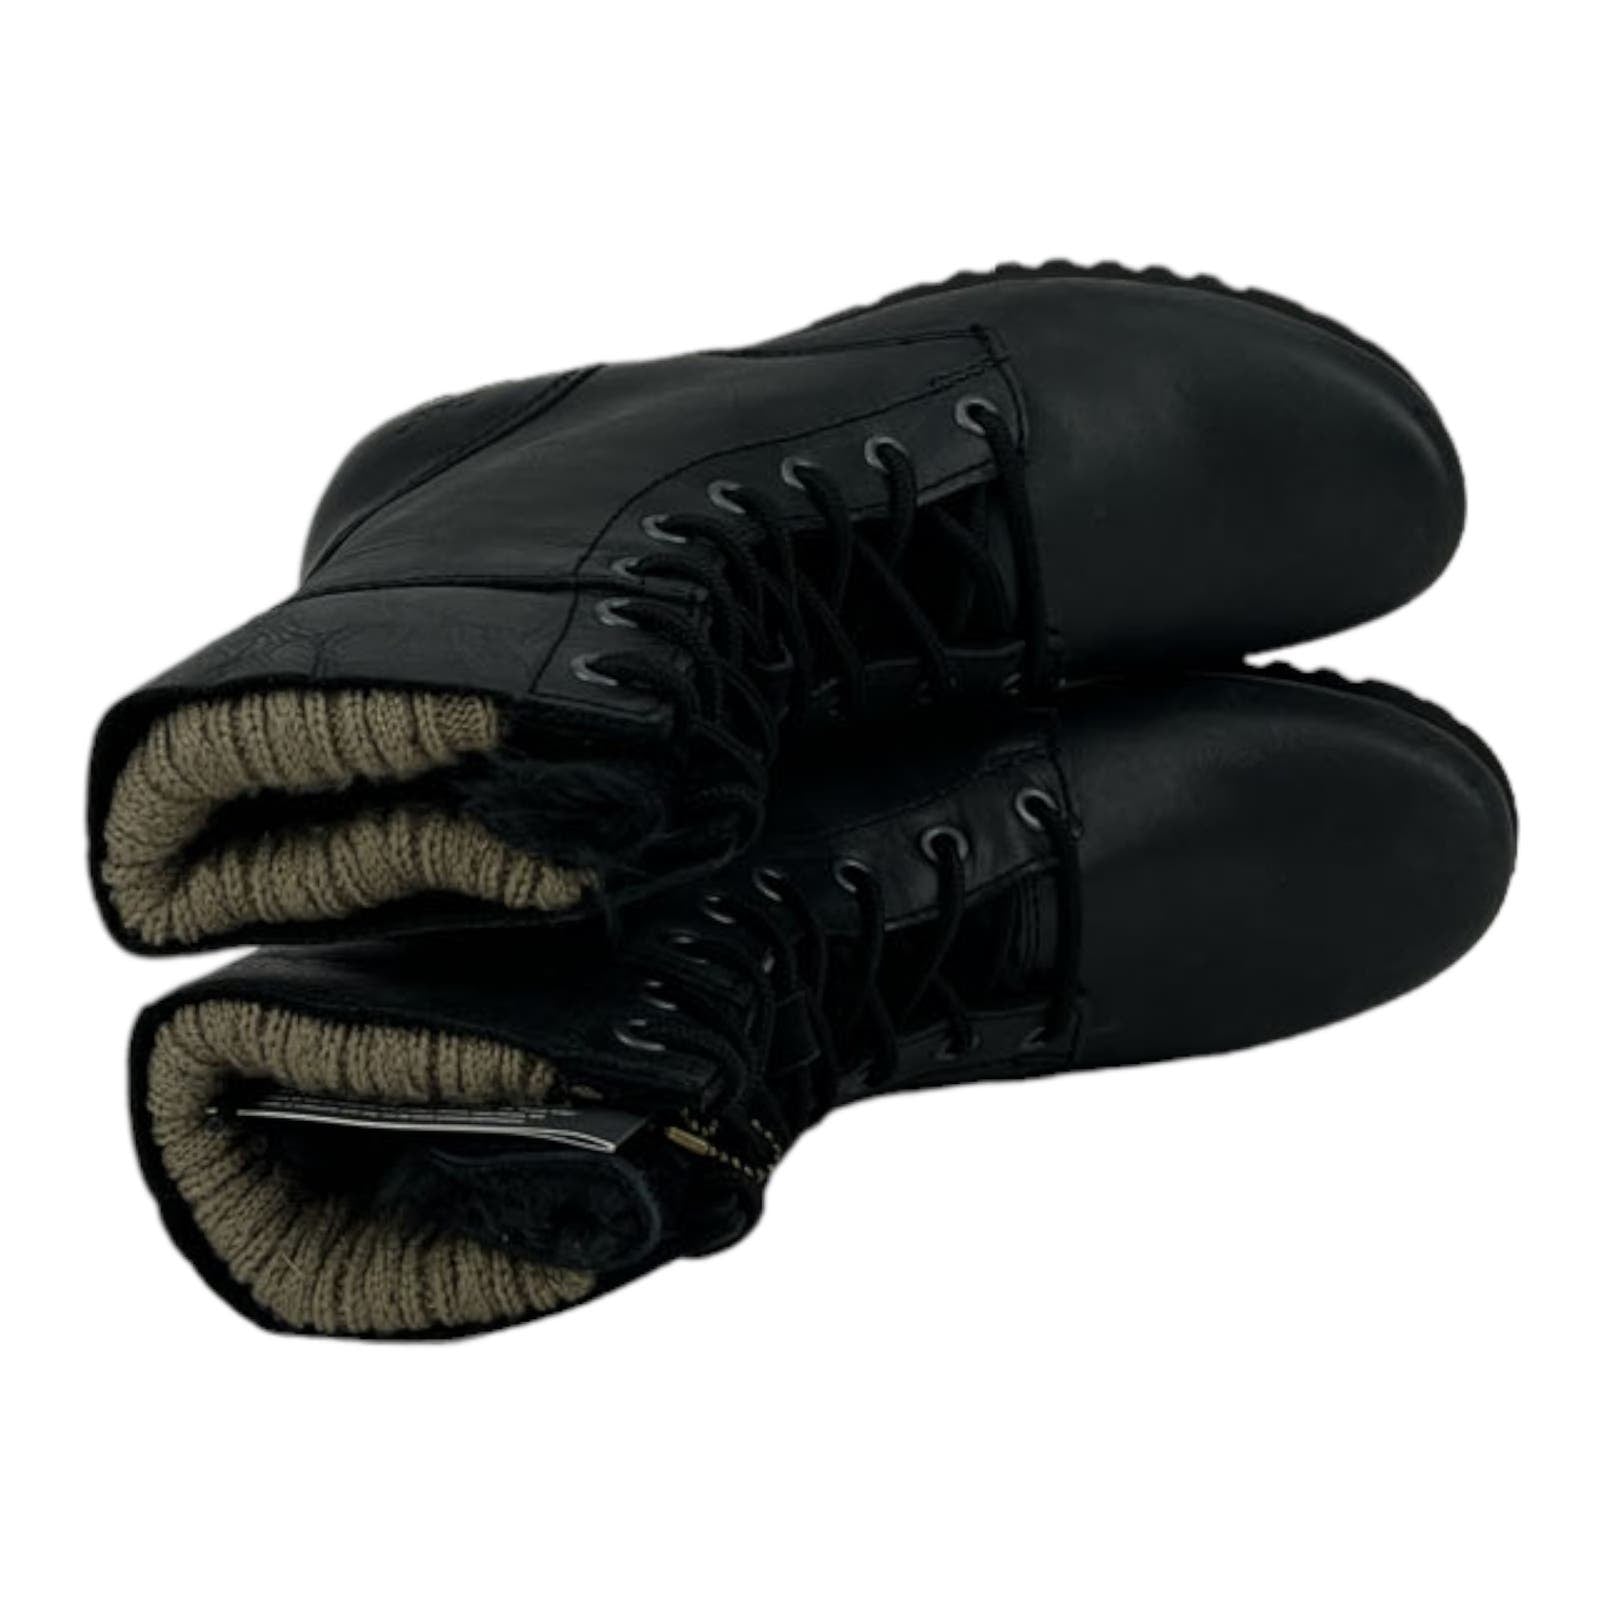 Caterpillar CAT Women US 7.5 Winter Alexi Combat Black Ankle Boots